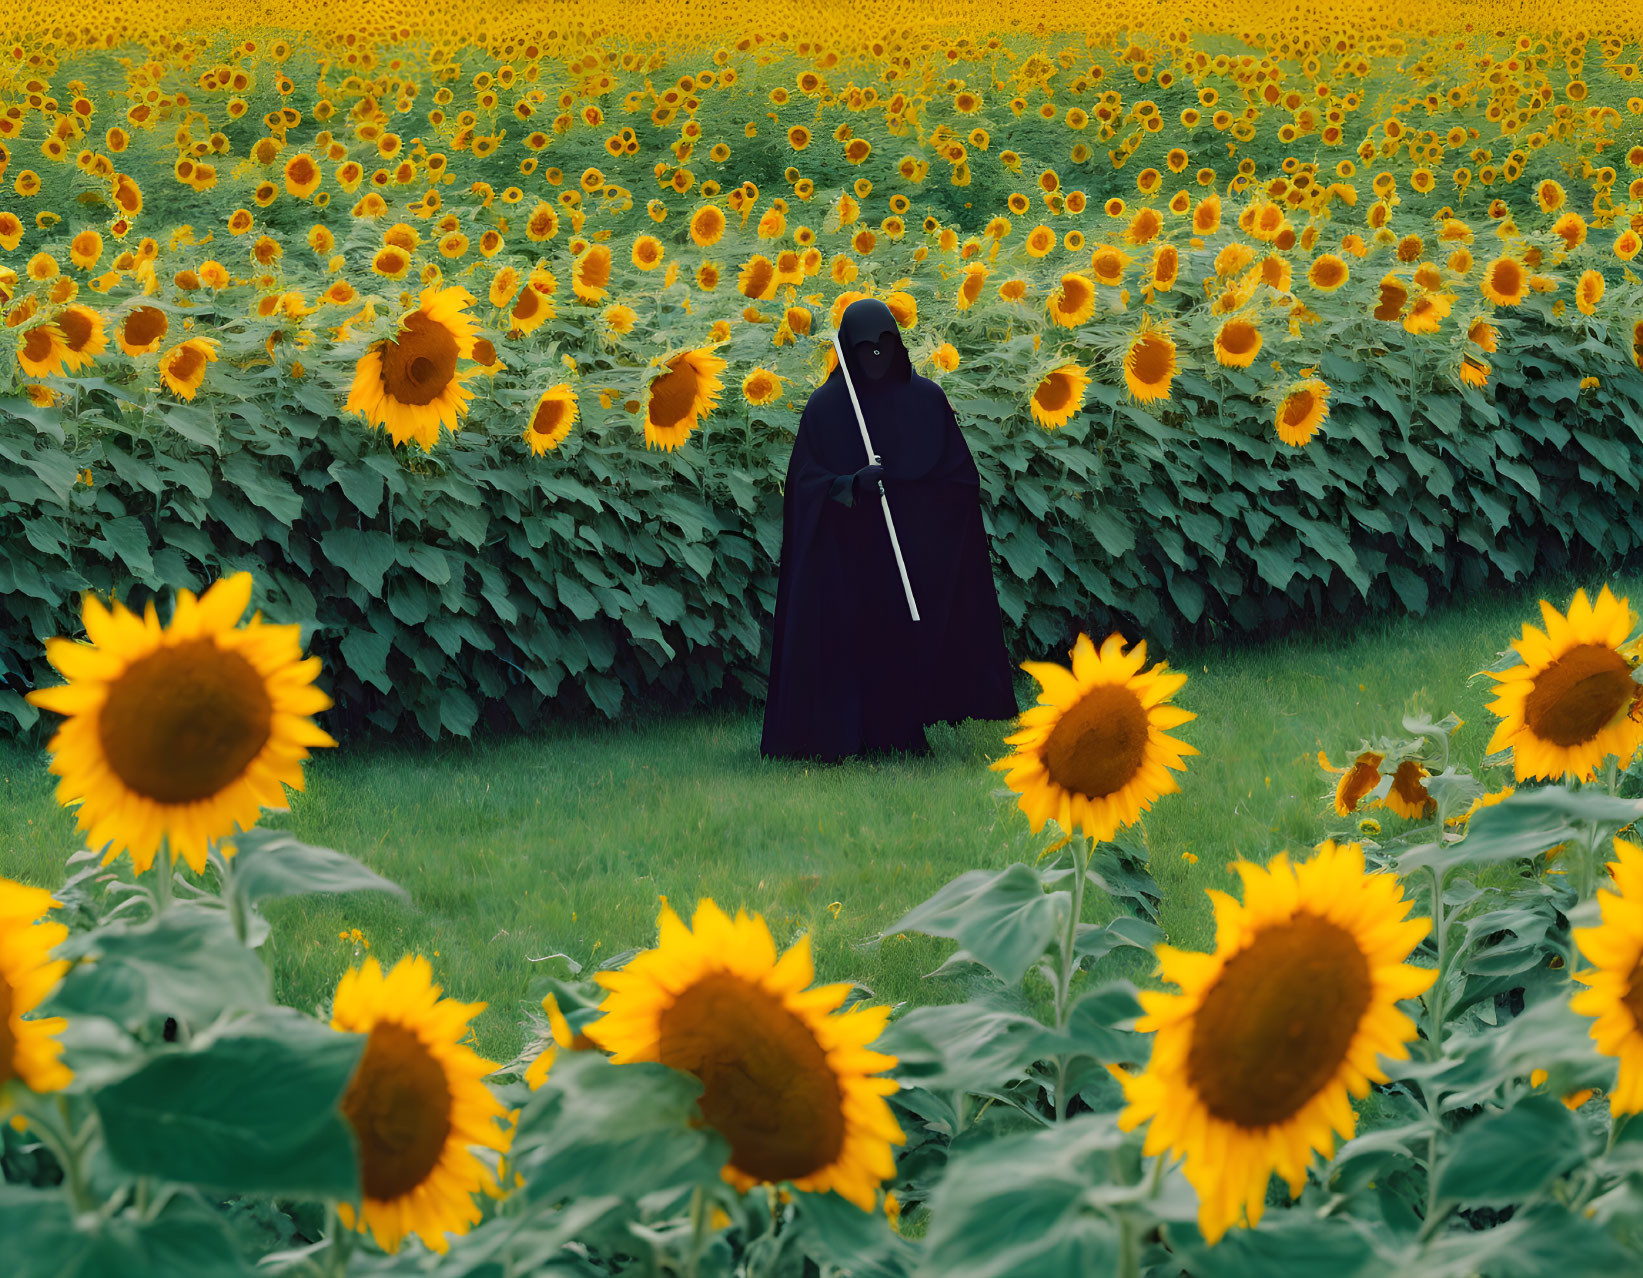 Person in Black Cloak in Vibrant Sunflower Field under Cloudy Sky